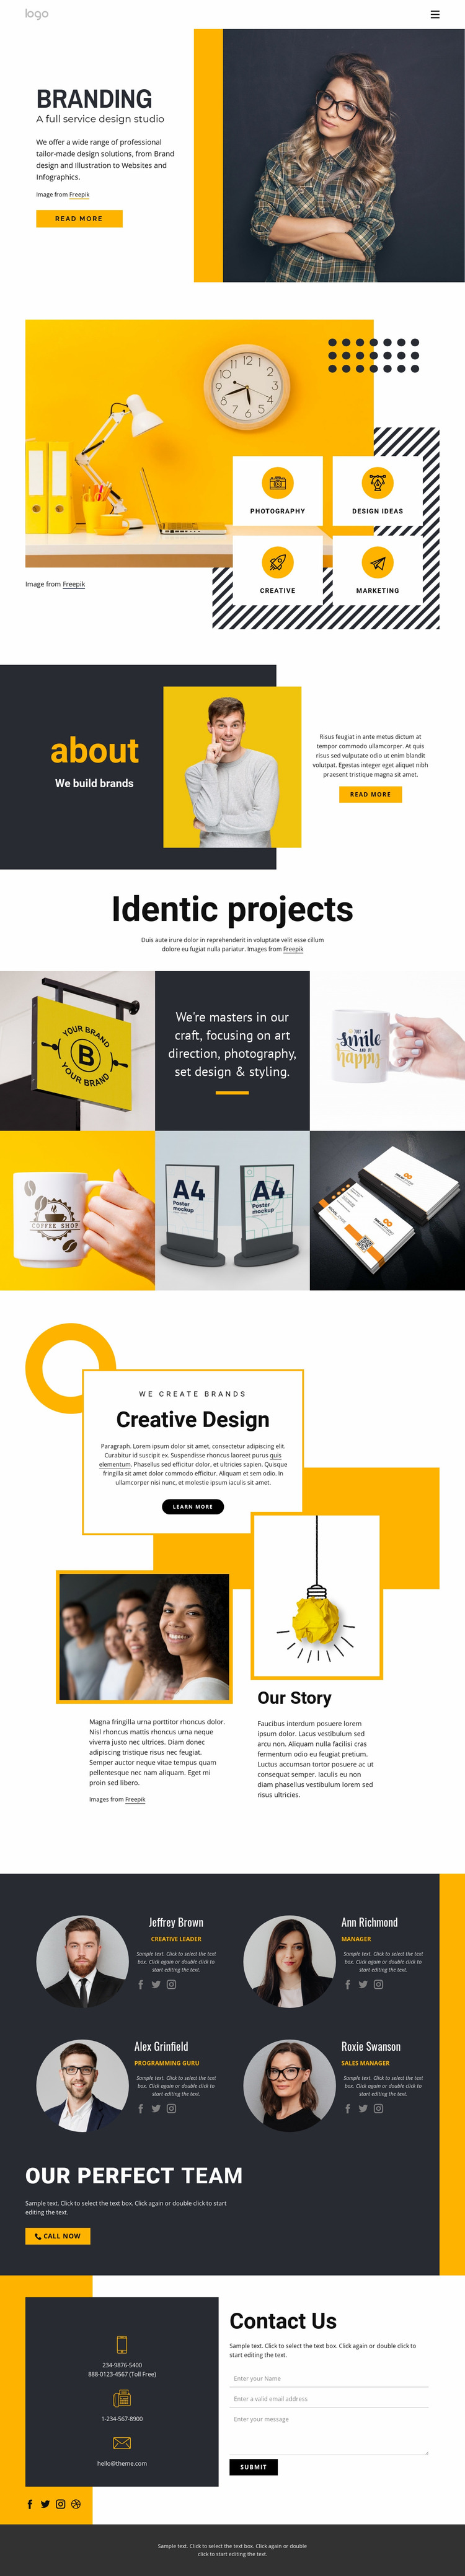 Full-service design studio Website Mockup